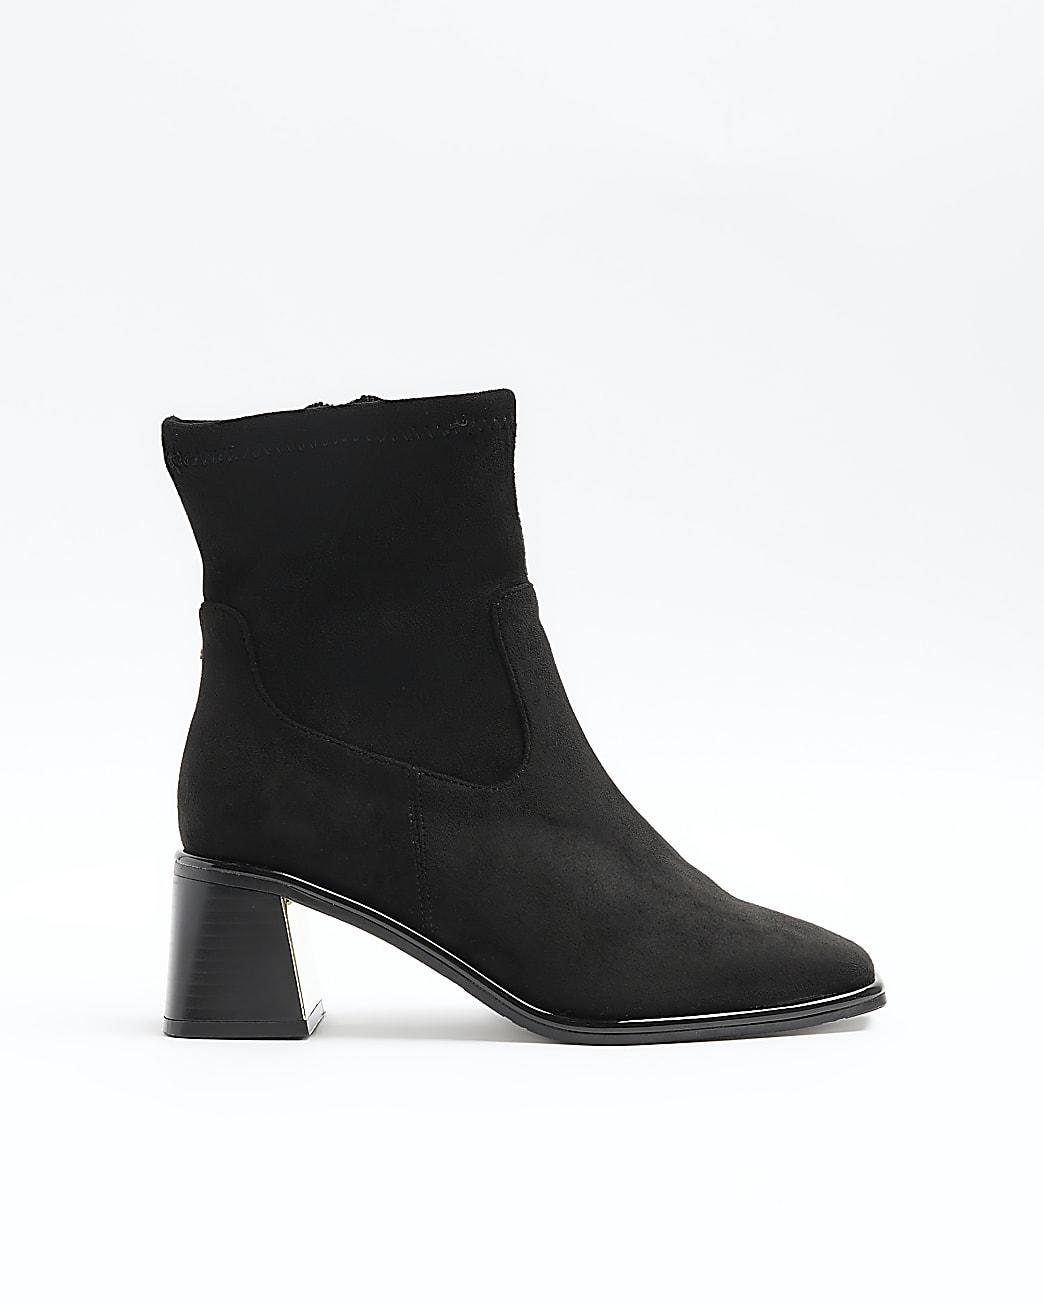 River Island Block Heel Ankle Boots in Black | Lyst UK